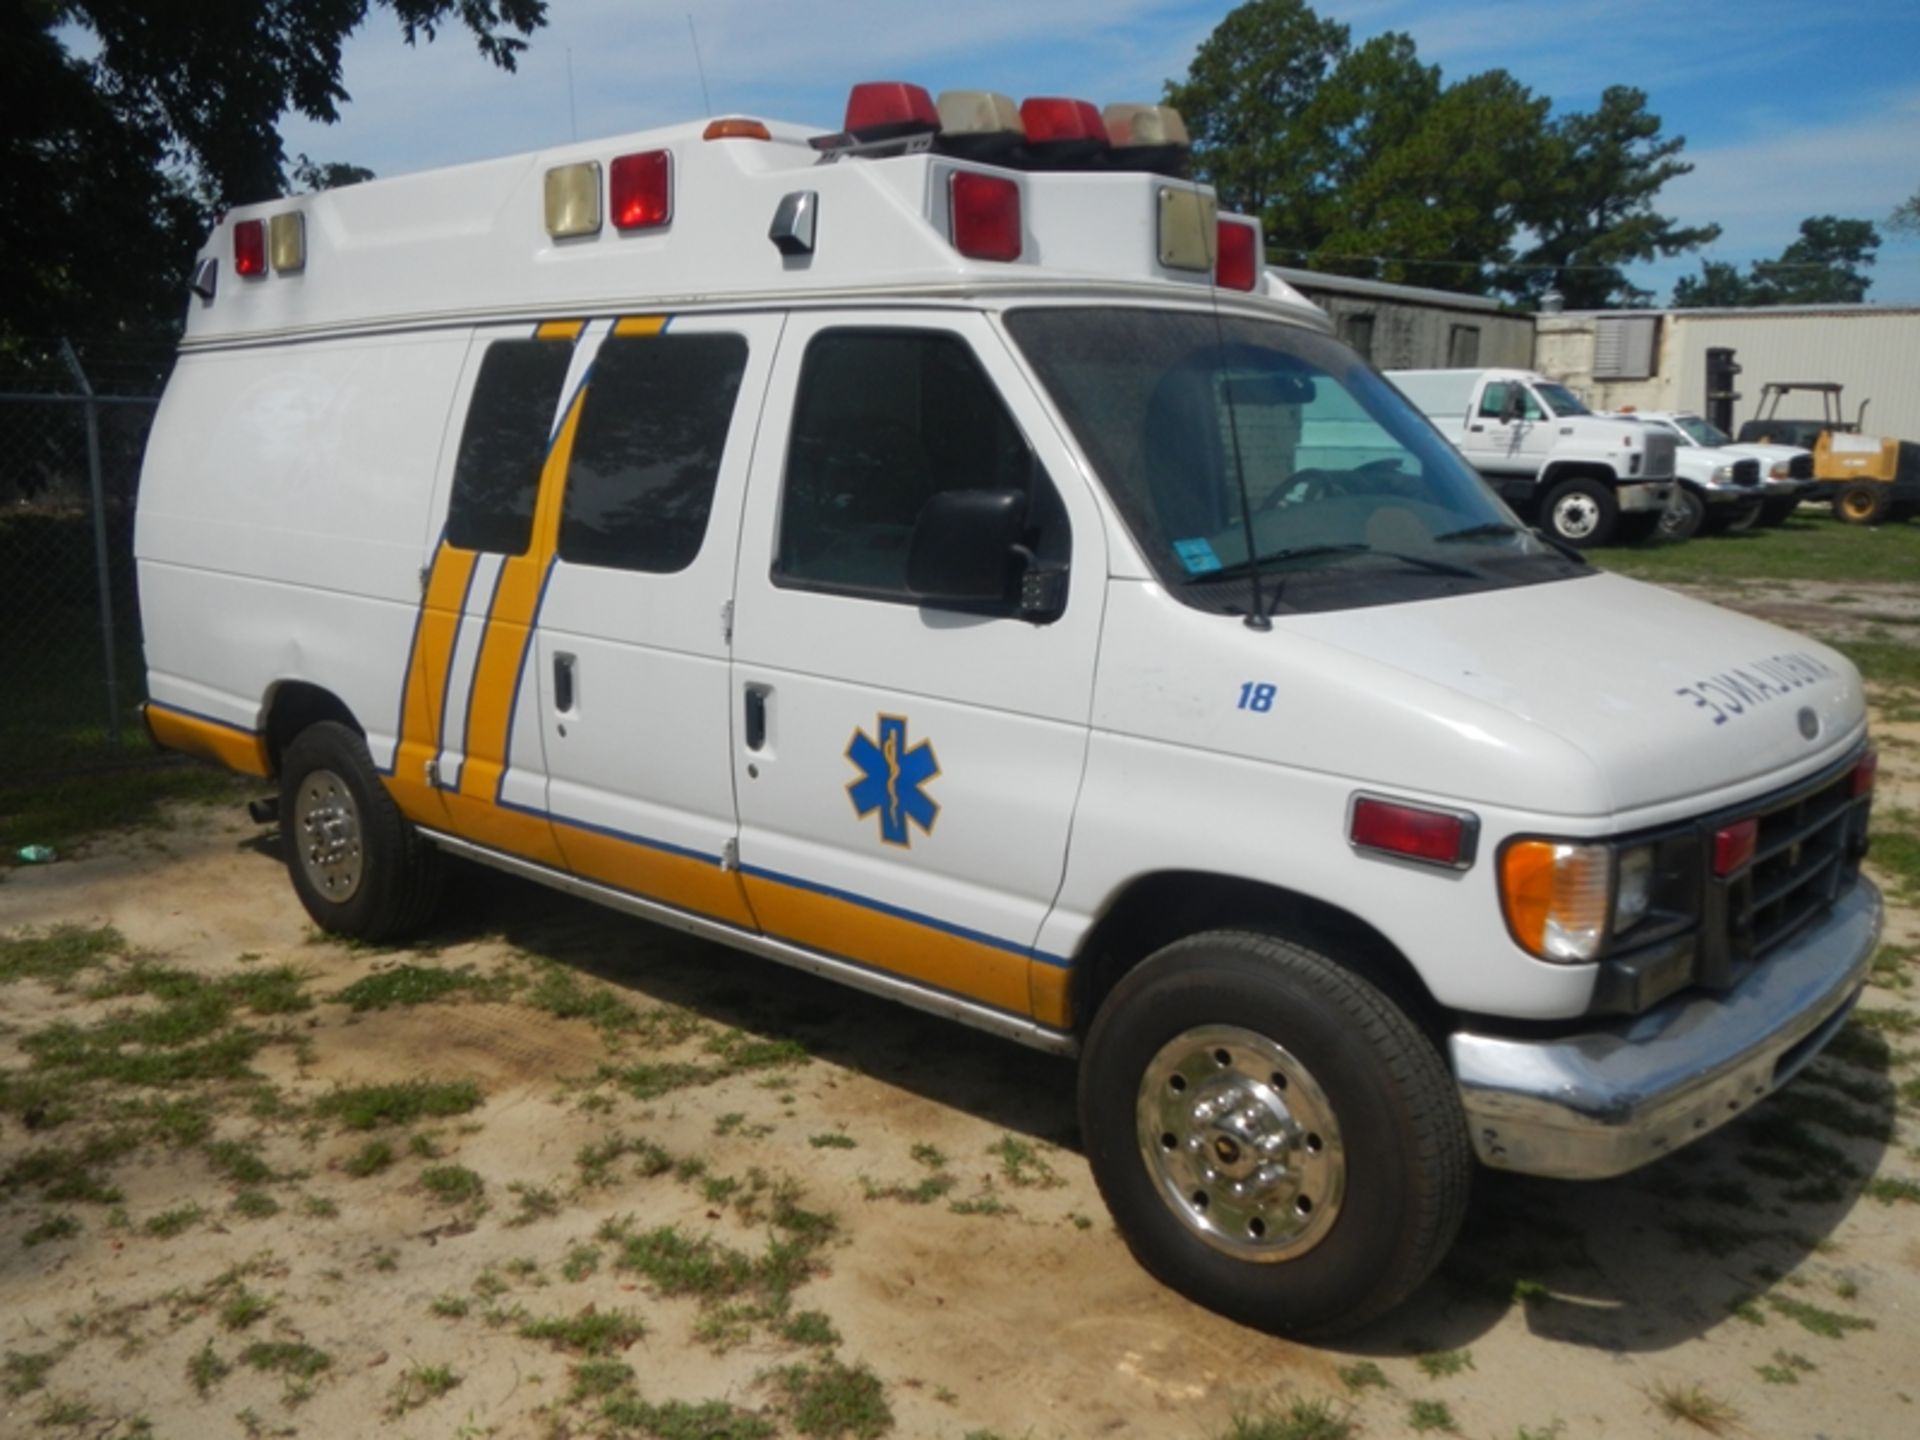 2001 FORD E-350 Super Duty Type II Ambulance, 7.3 diesel - 248,021 miles - 1FDSS34F51HA84186 - Image 3 of 6